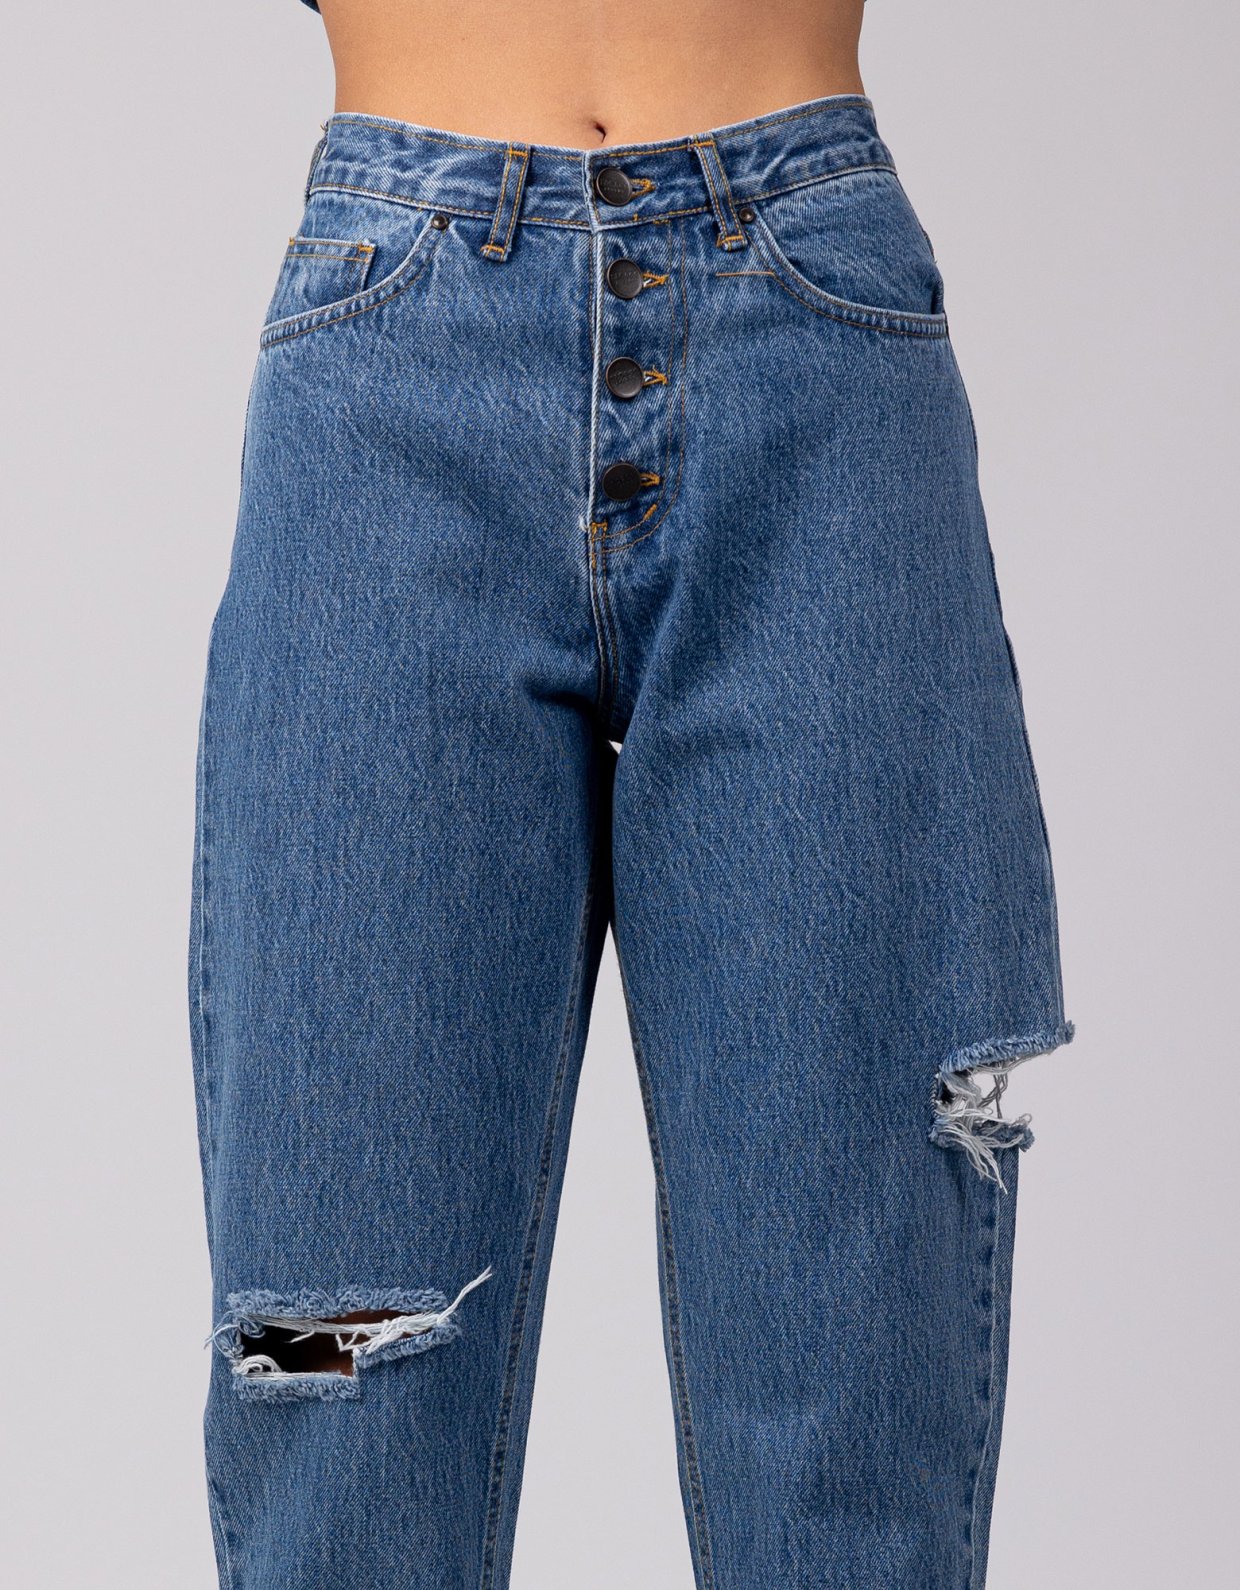 Sac & CO Jeans Domenica denim pants dark blue